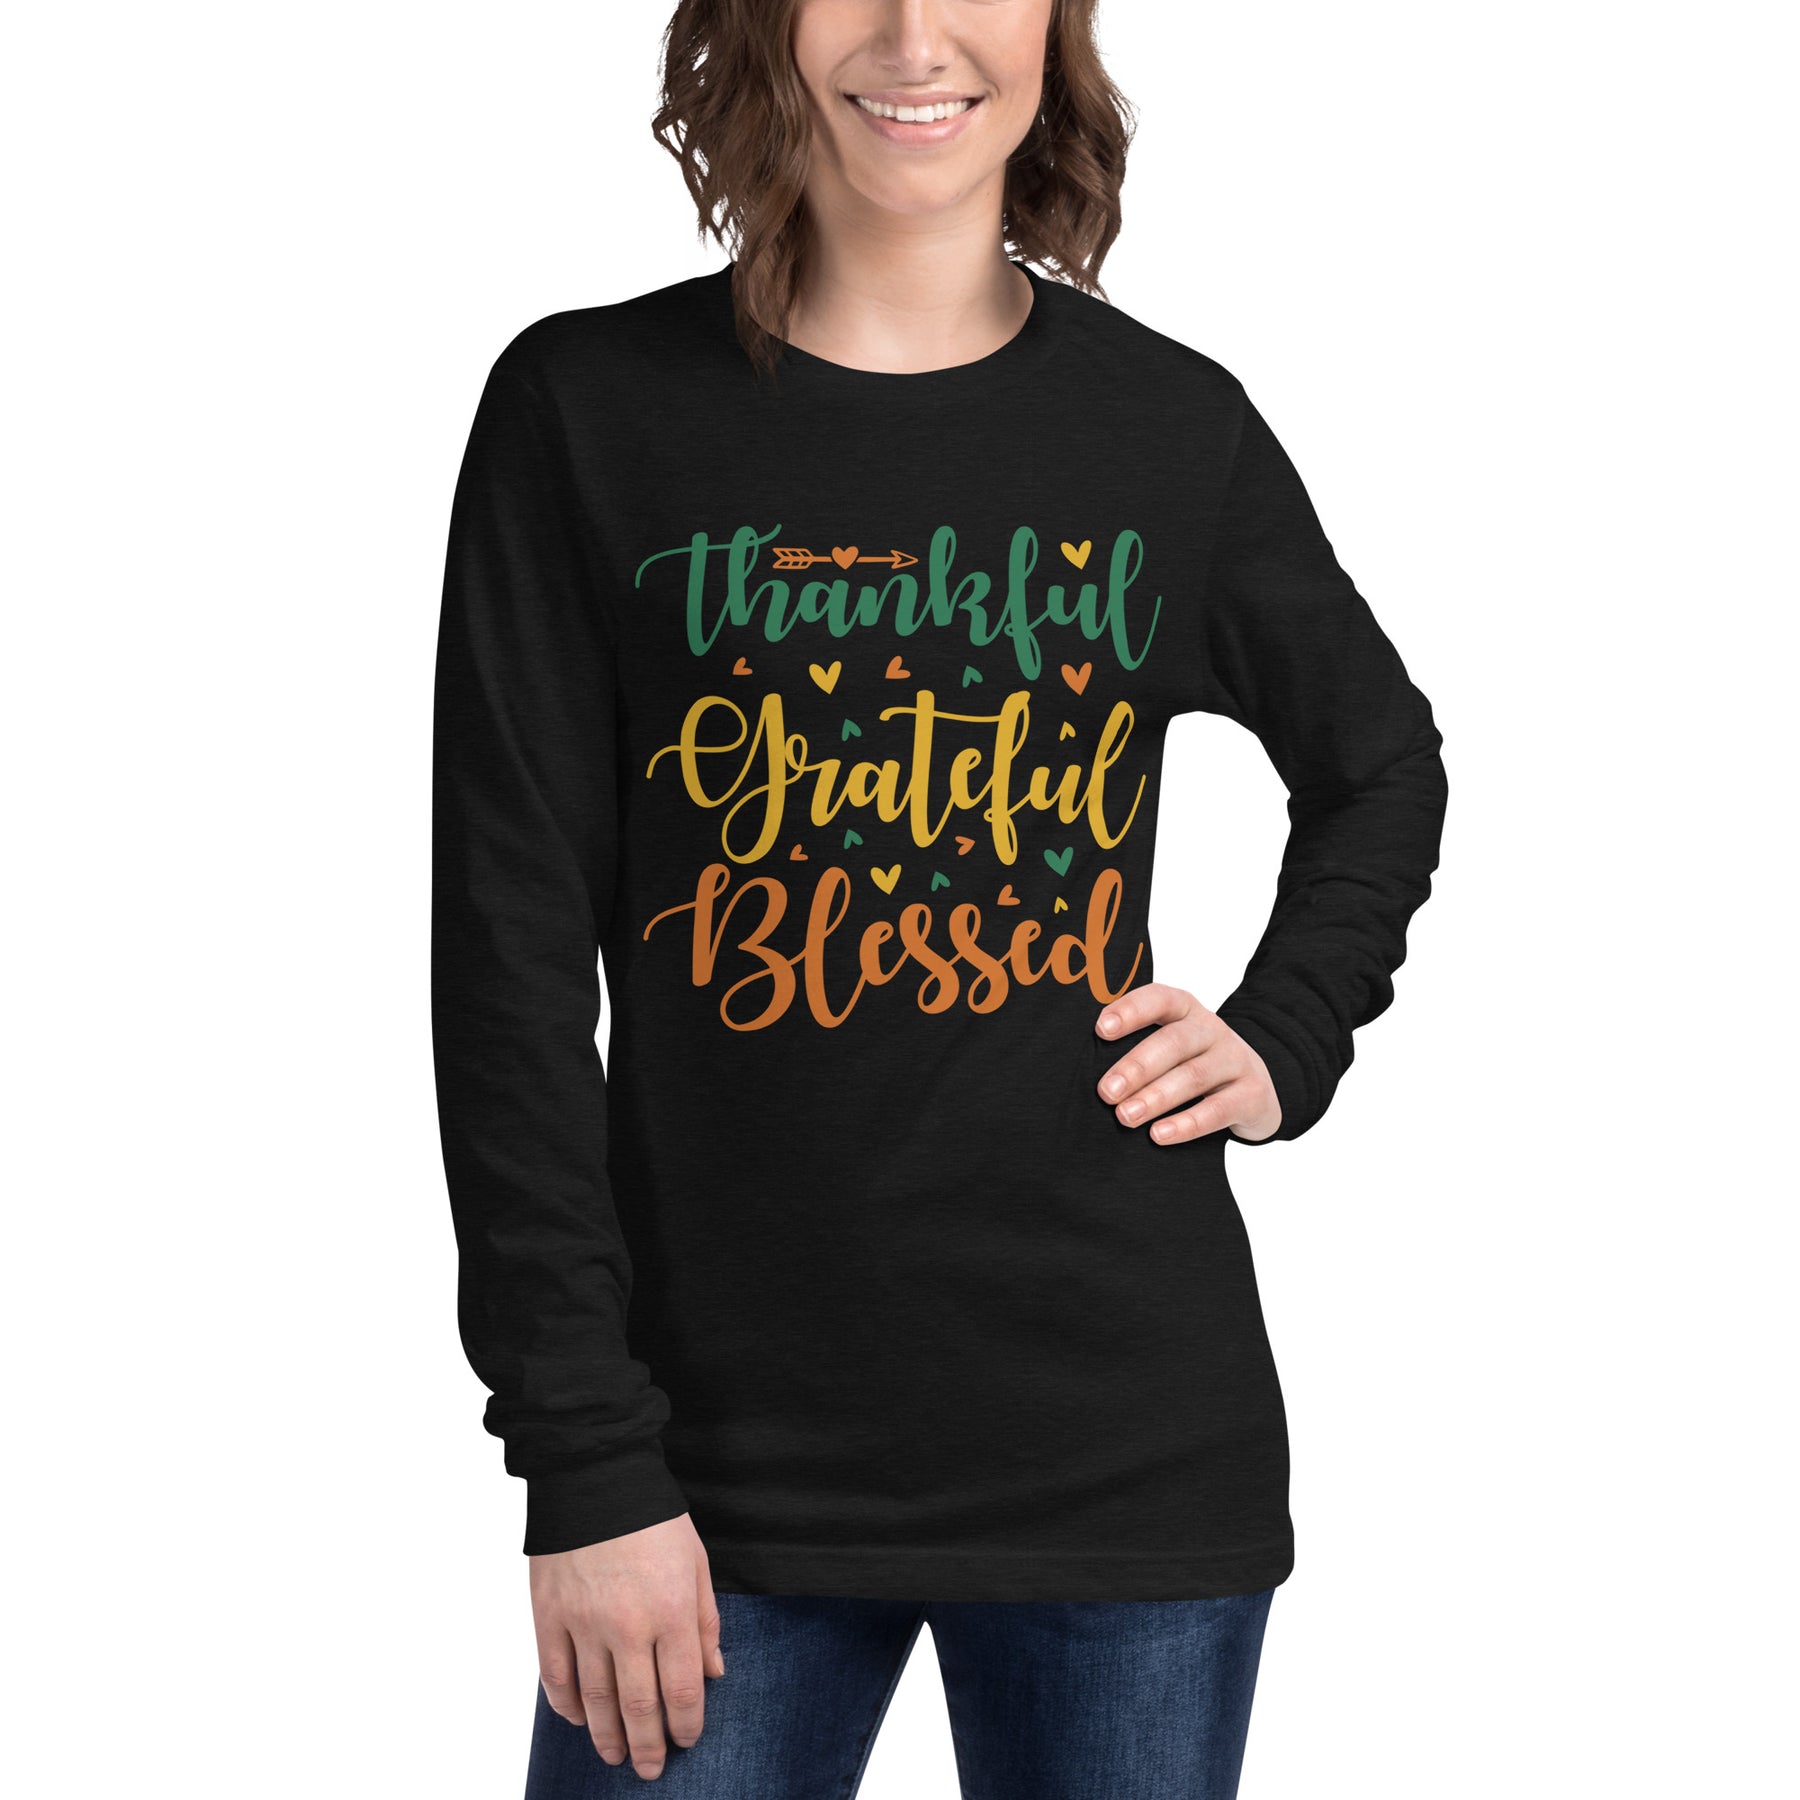 Thankful, Grateful, Blessed - Women's Long Sleeve T-Shirt